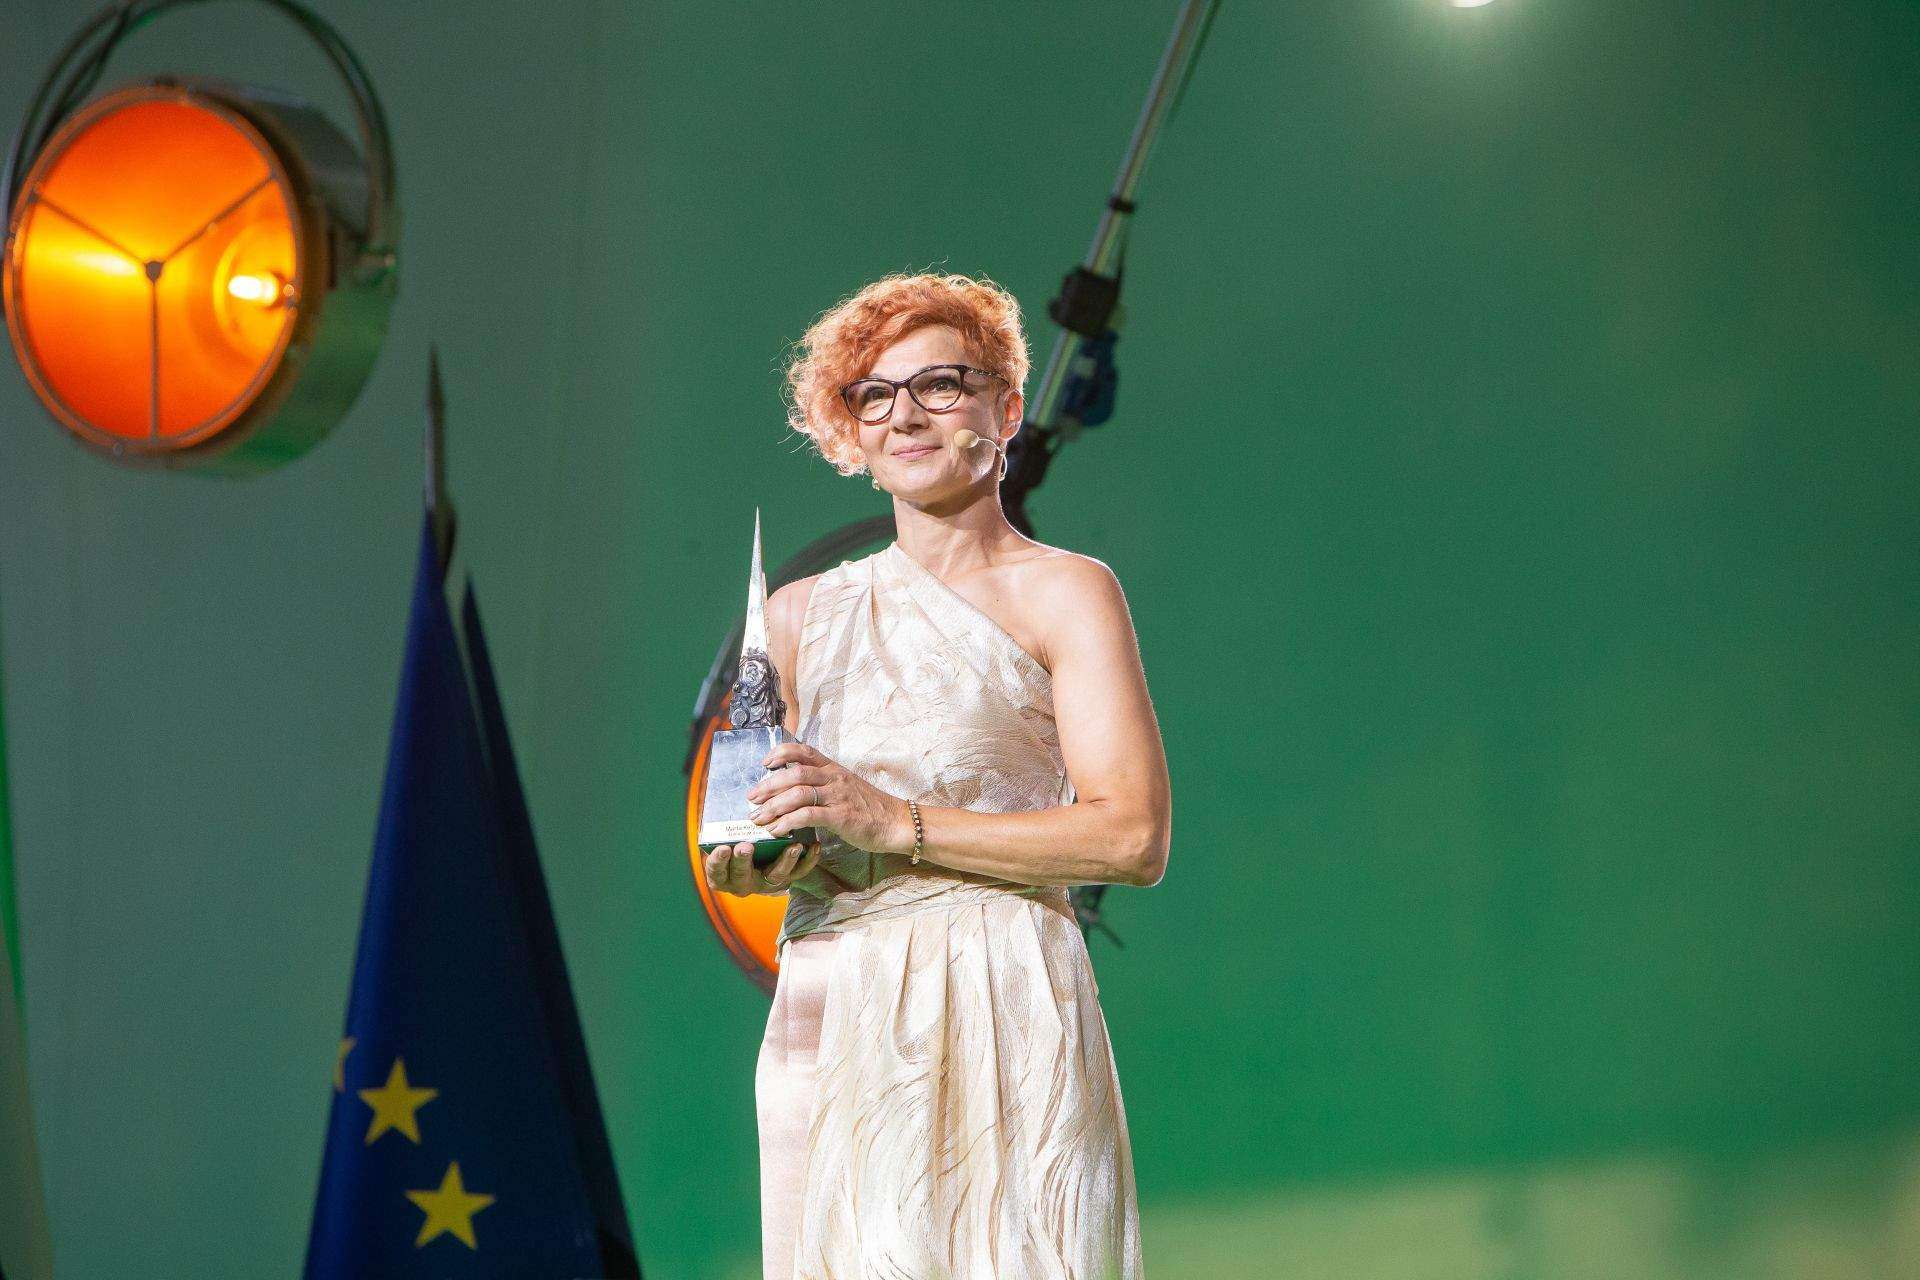 Economic Oscar for Managing Director Mrs. Marta Kelvišar!